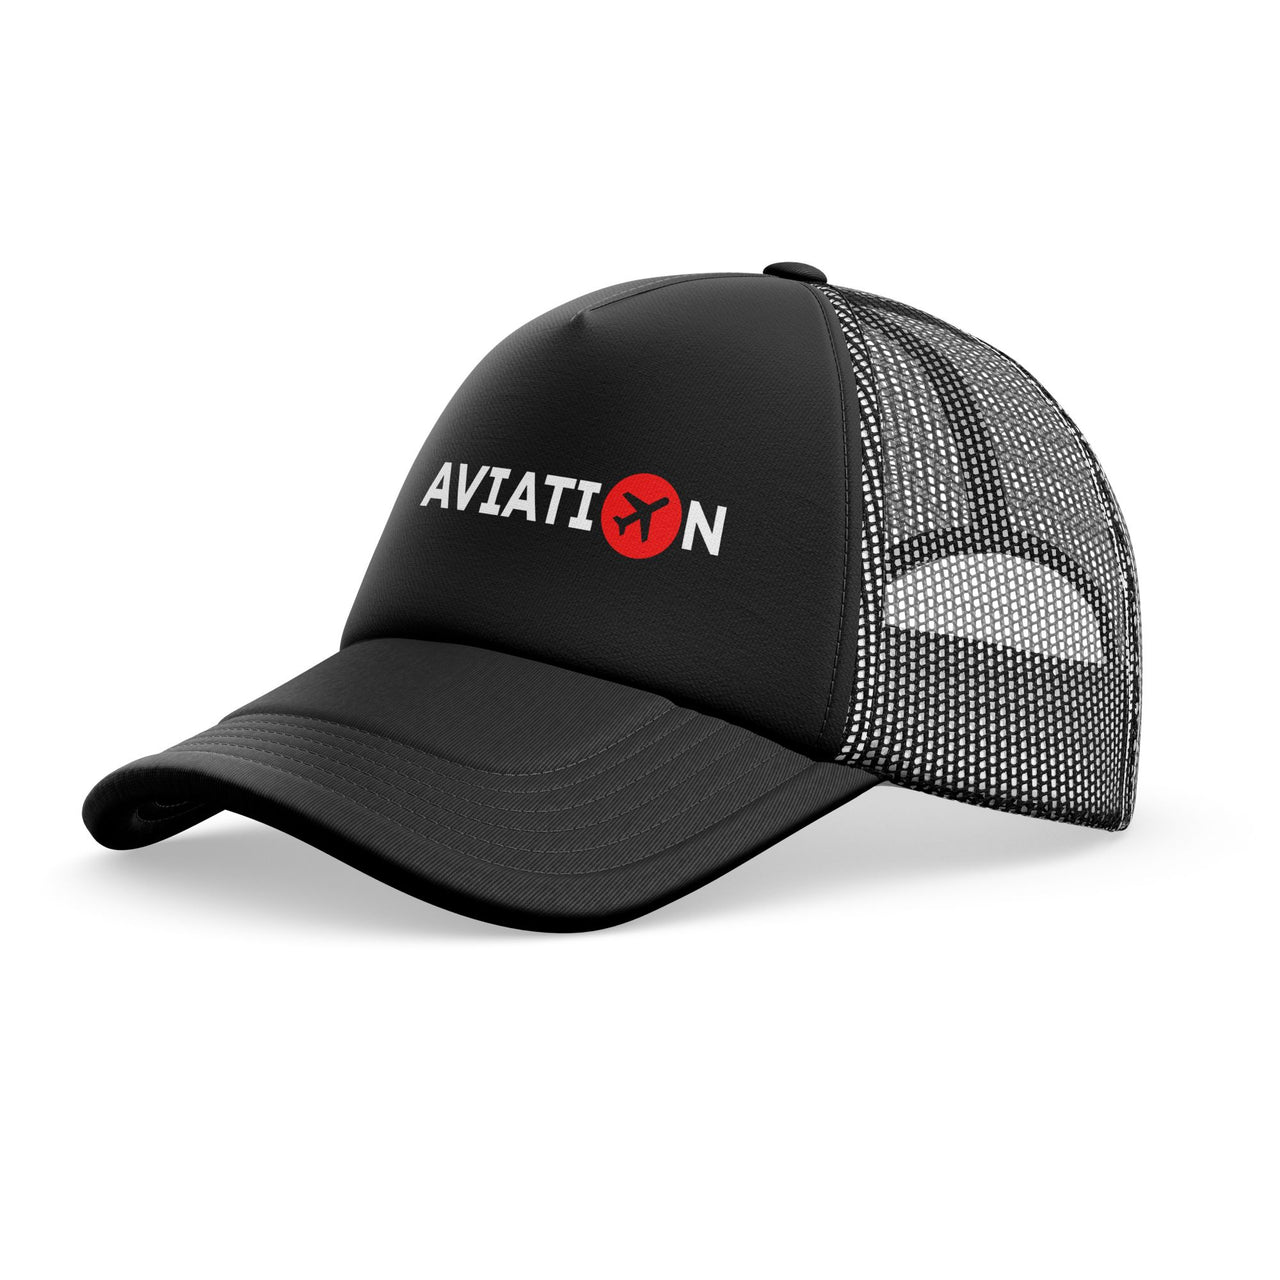 Aviation Designed Trucker Caps & Hats